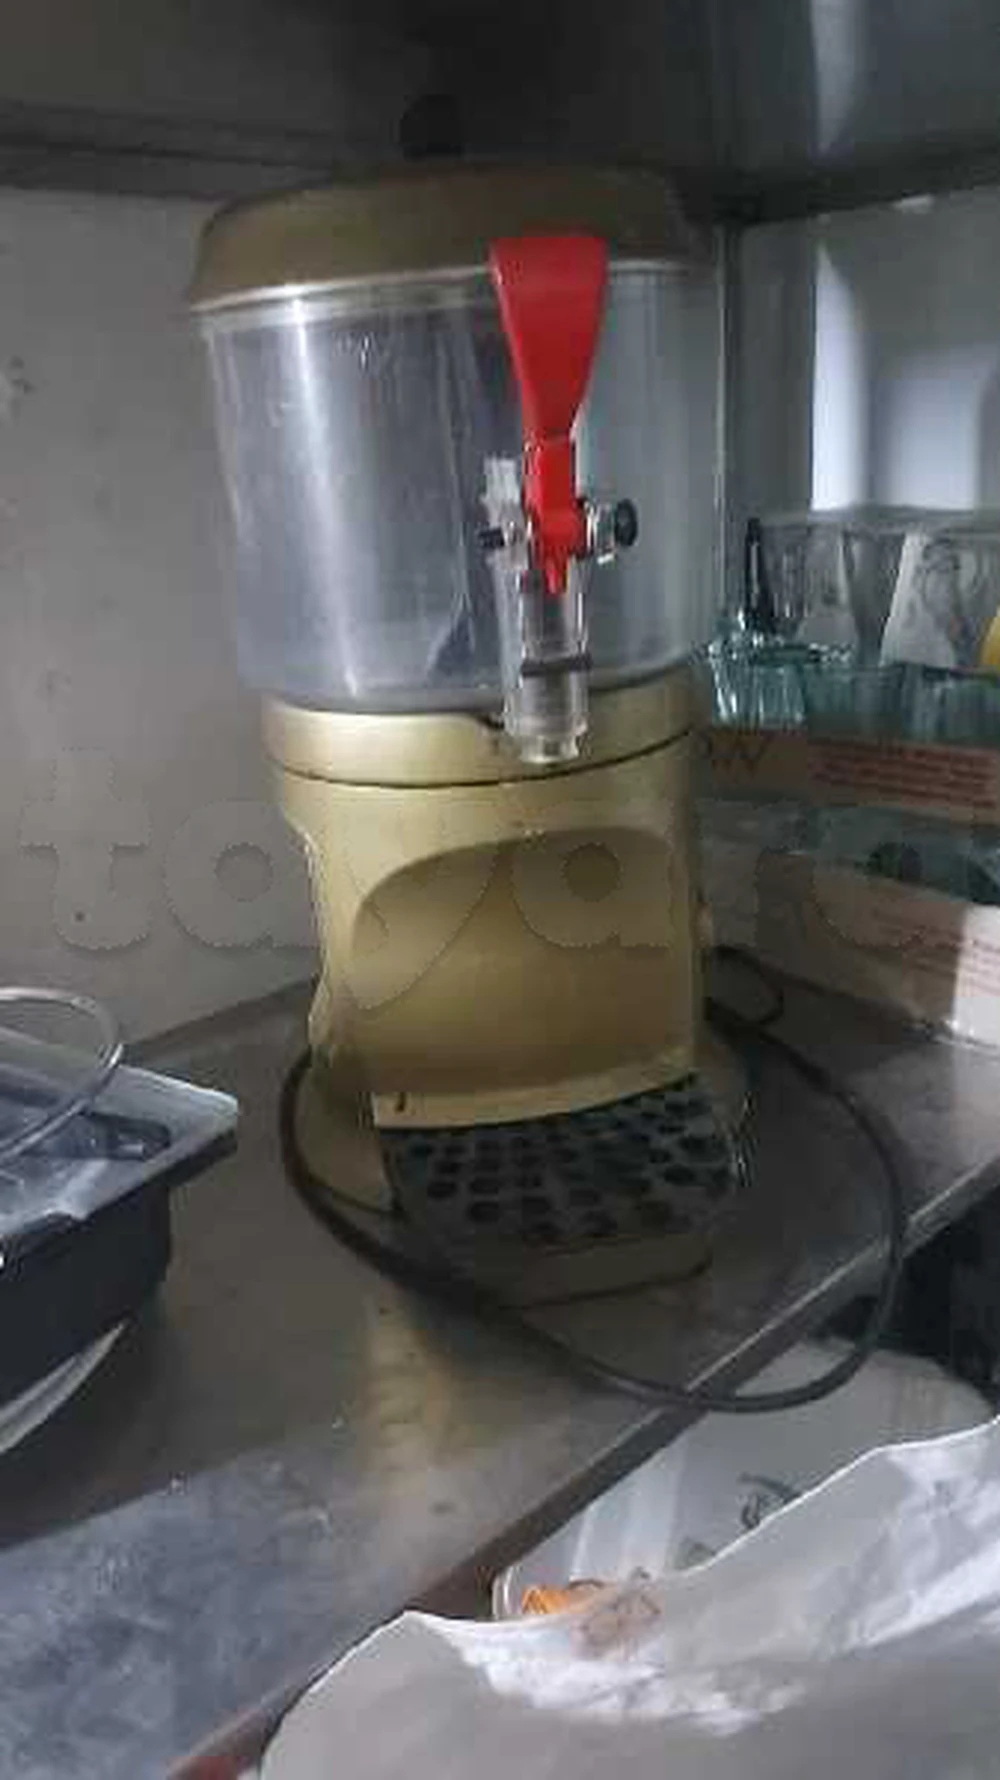 Machine à chocolat chaud Tunisie